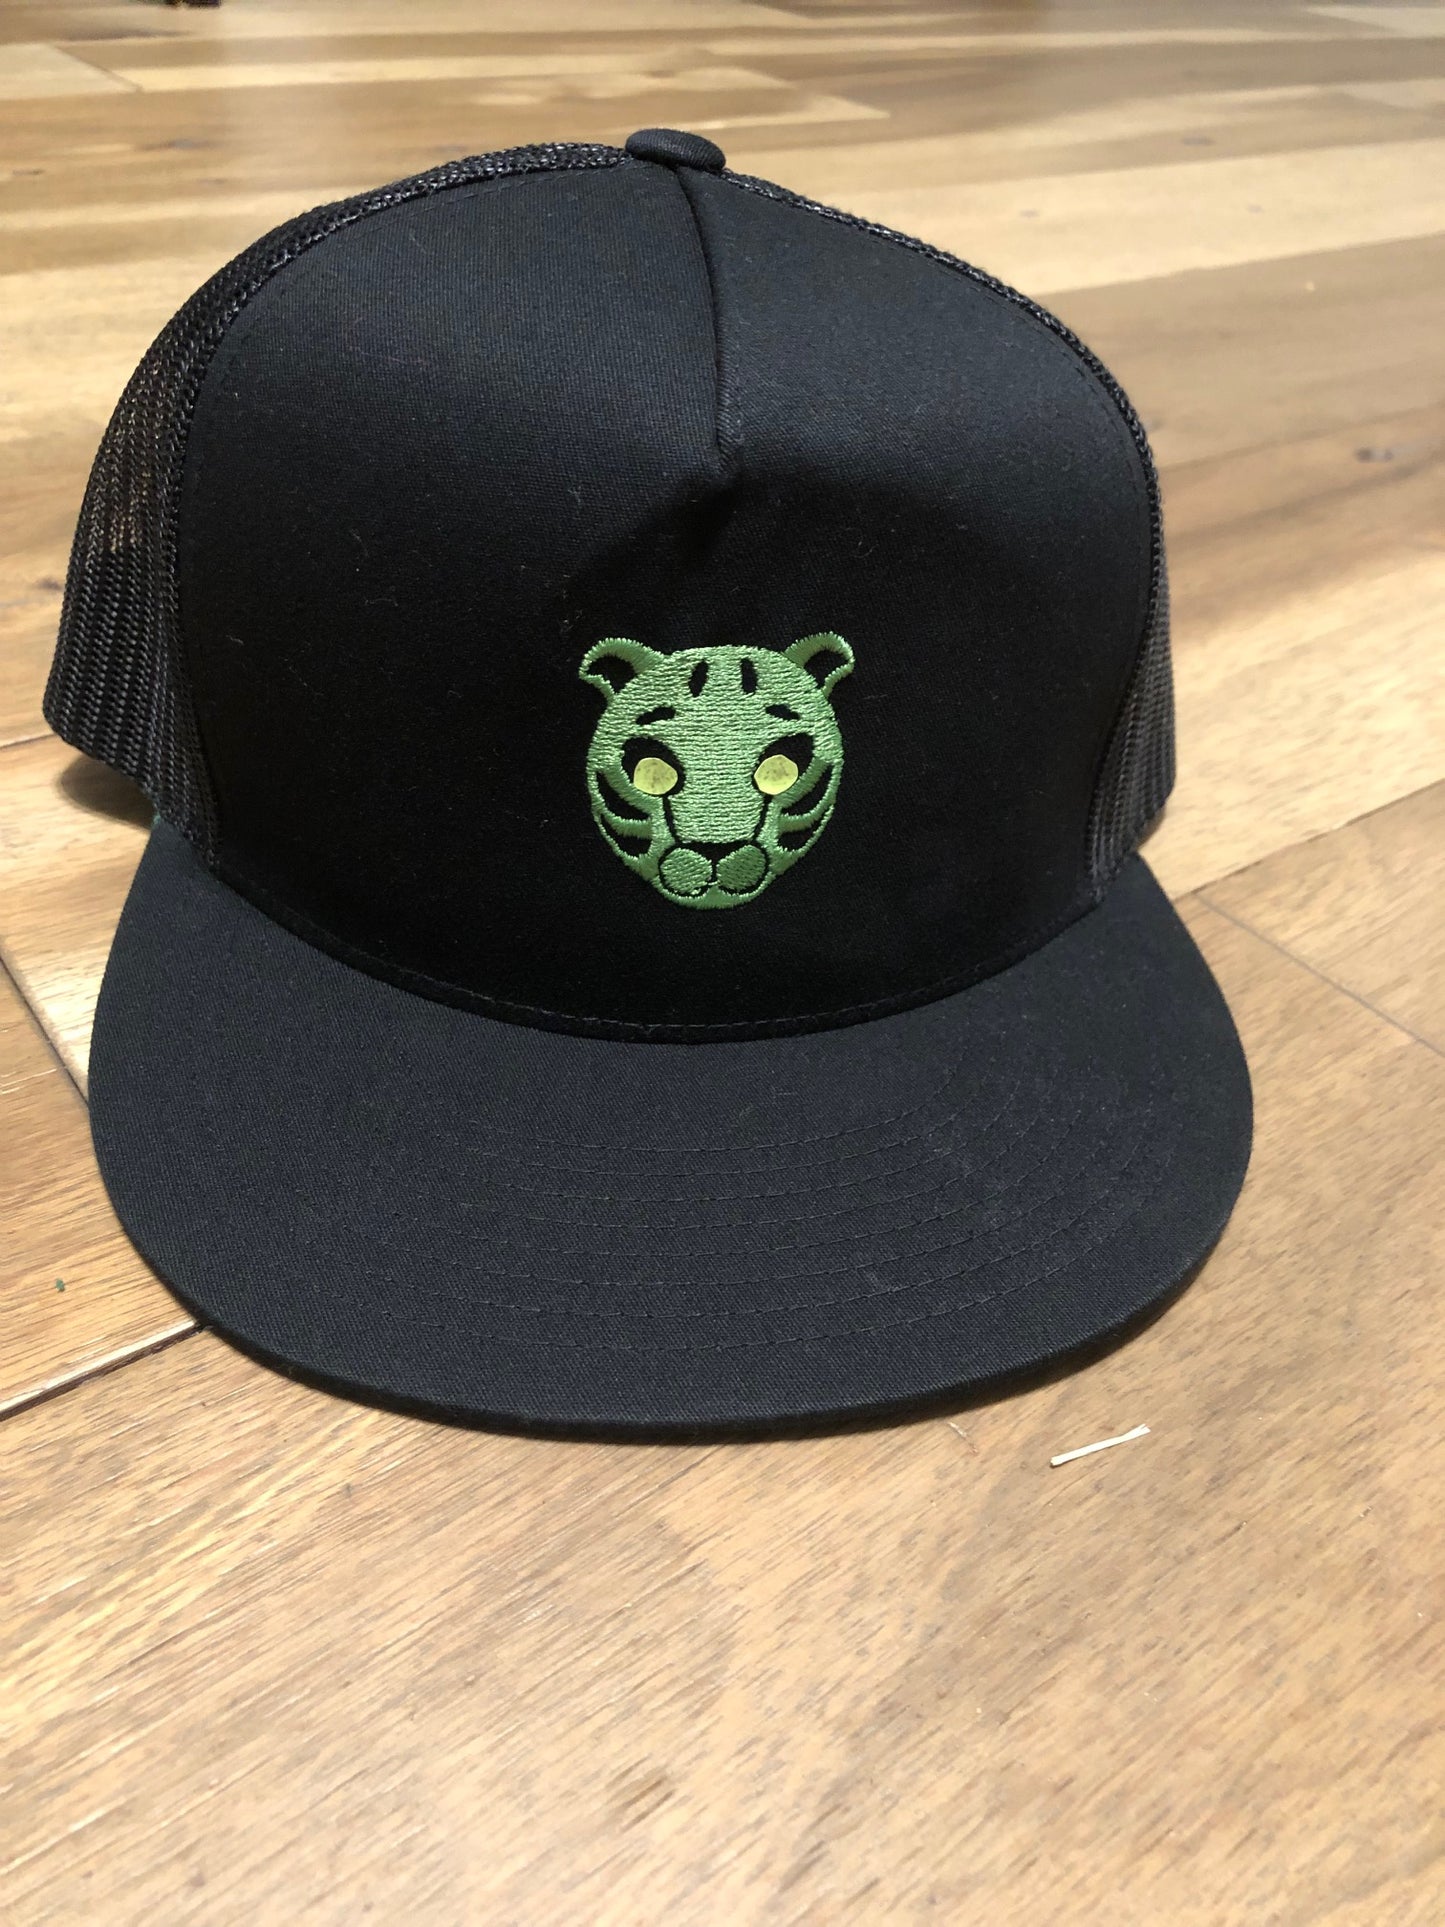 Green tiger embroidered black snap back hat or baseball cap